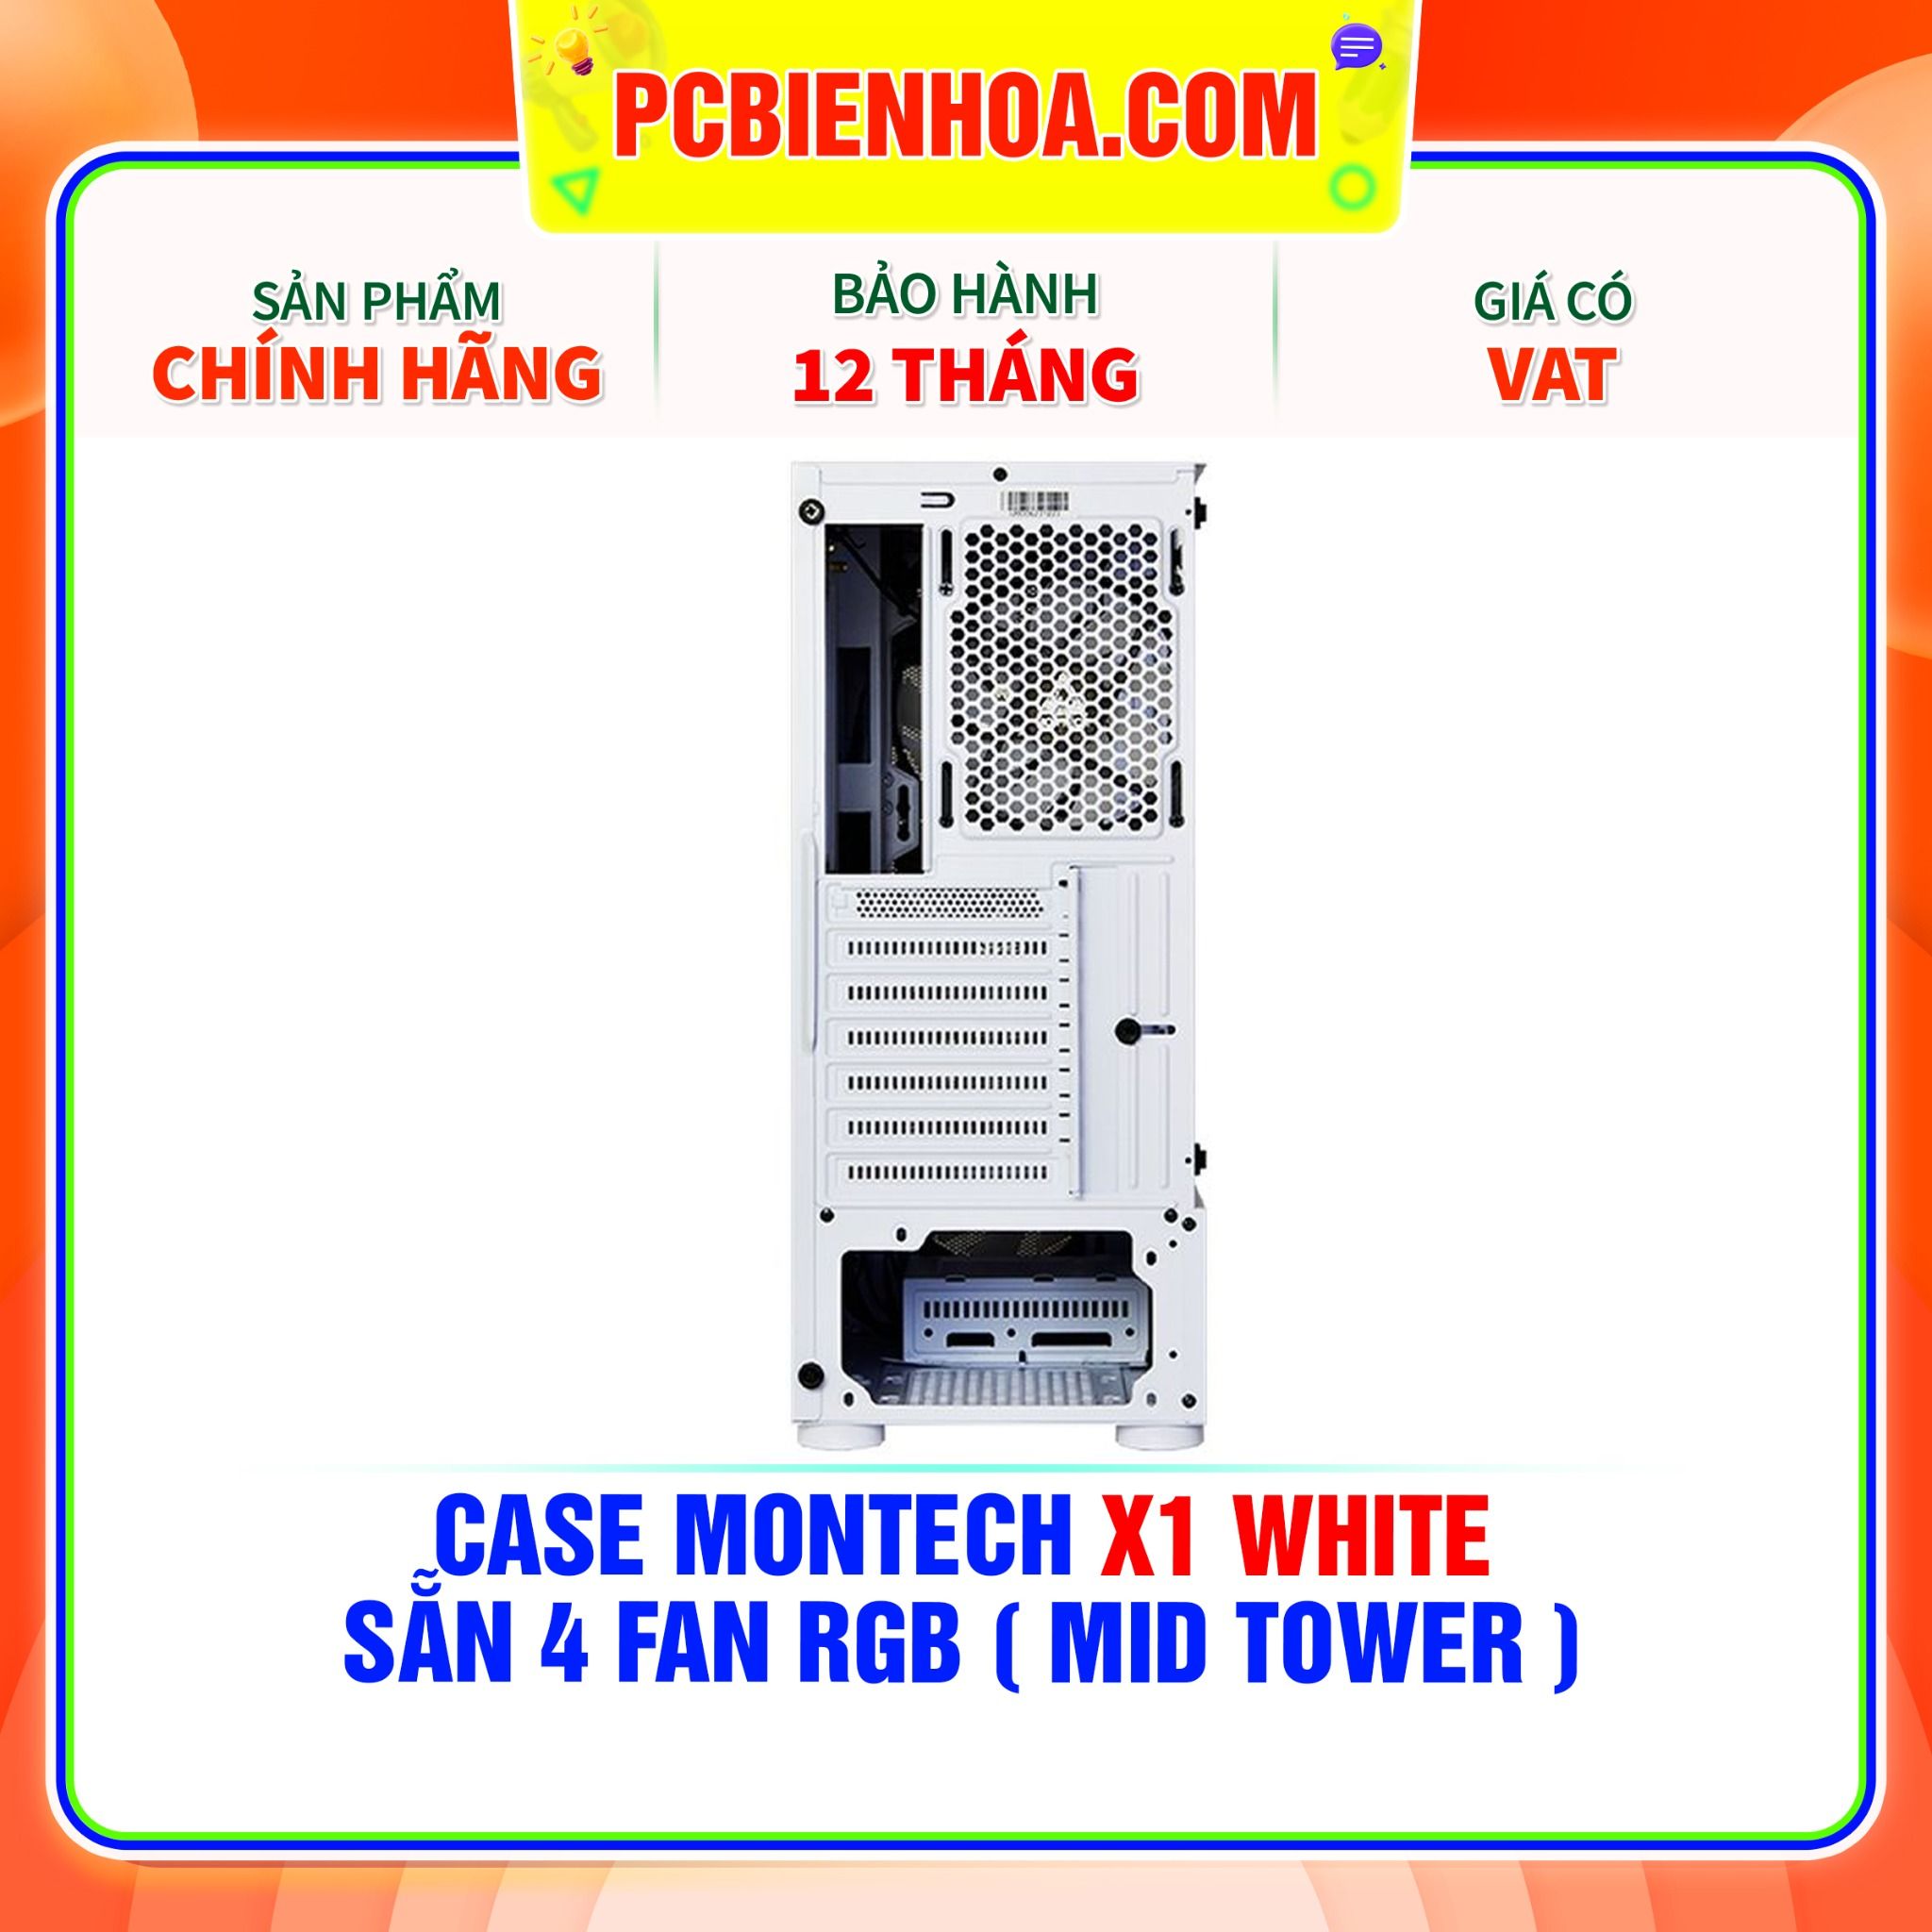  CASE MONTECH X1 WHITE - SẴN 4 FAN RGB ( MID TOWER ) 